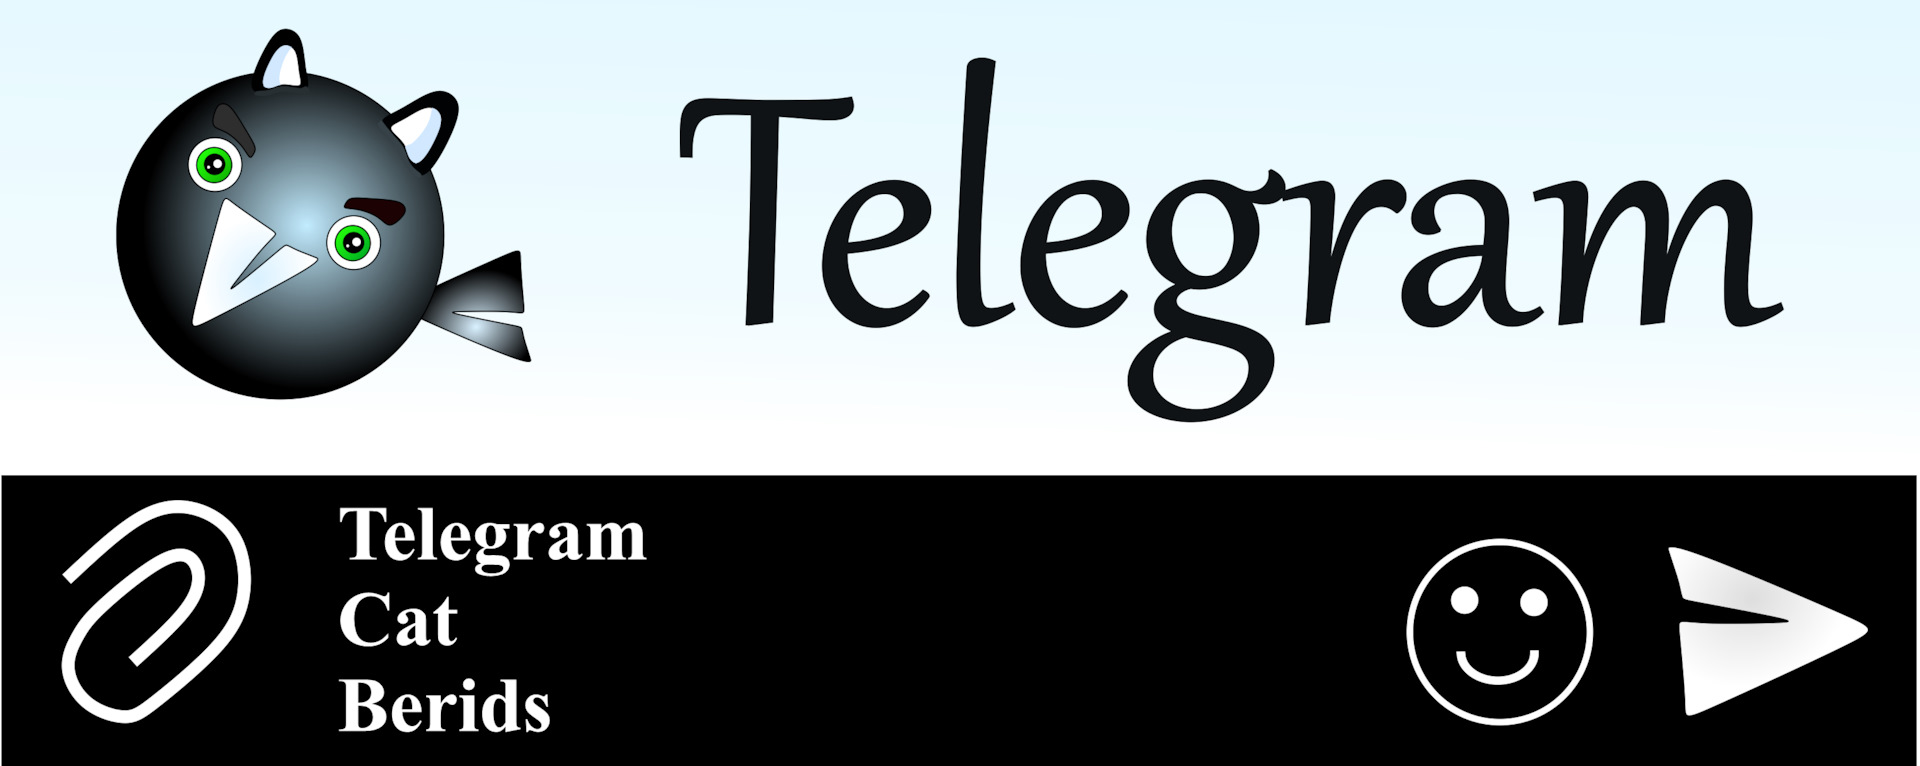 Русский язык для телеграмм виндовс фото 55